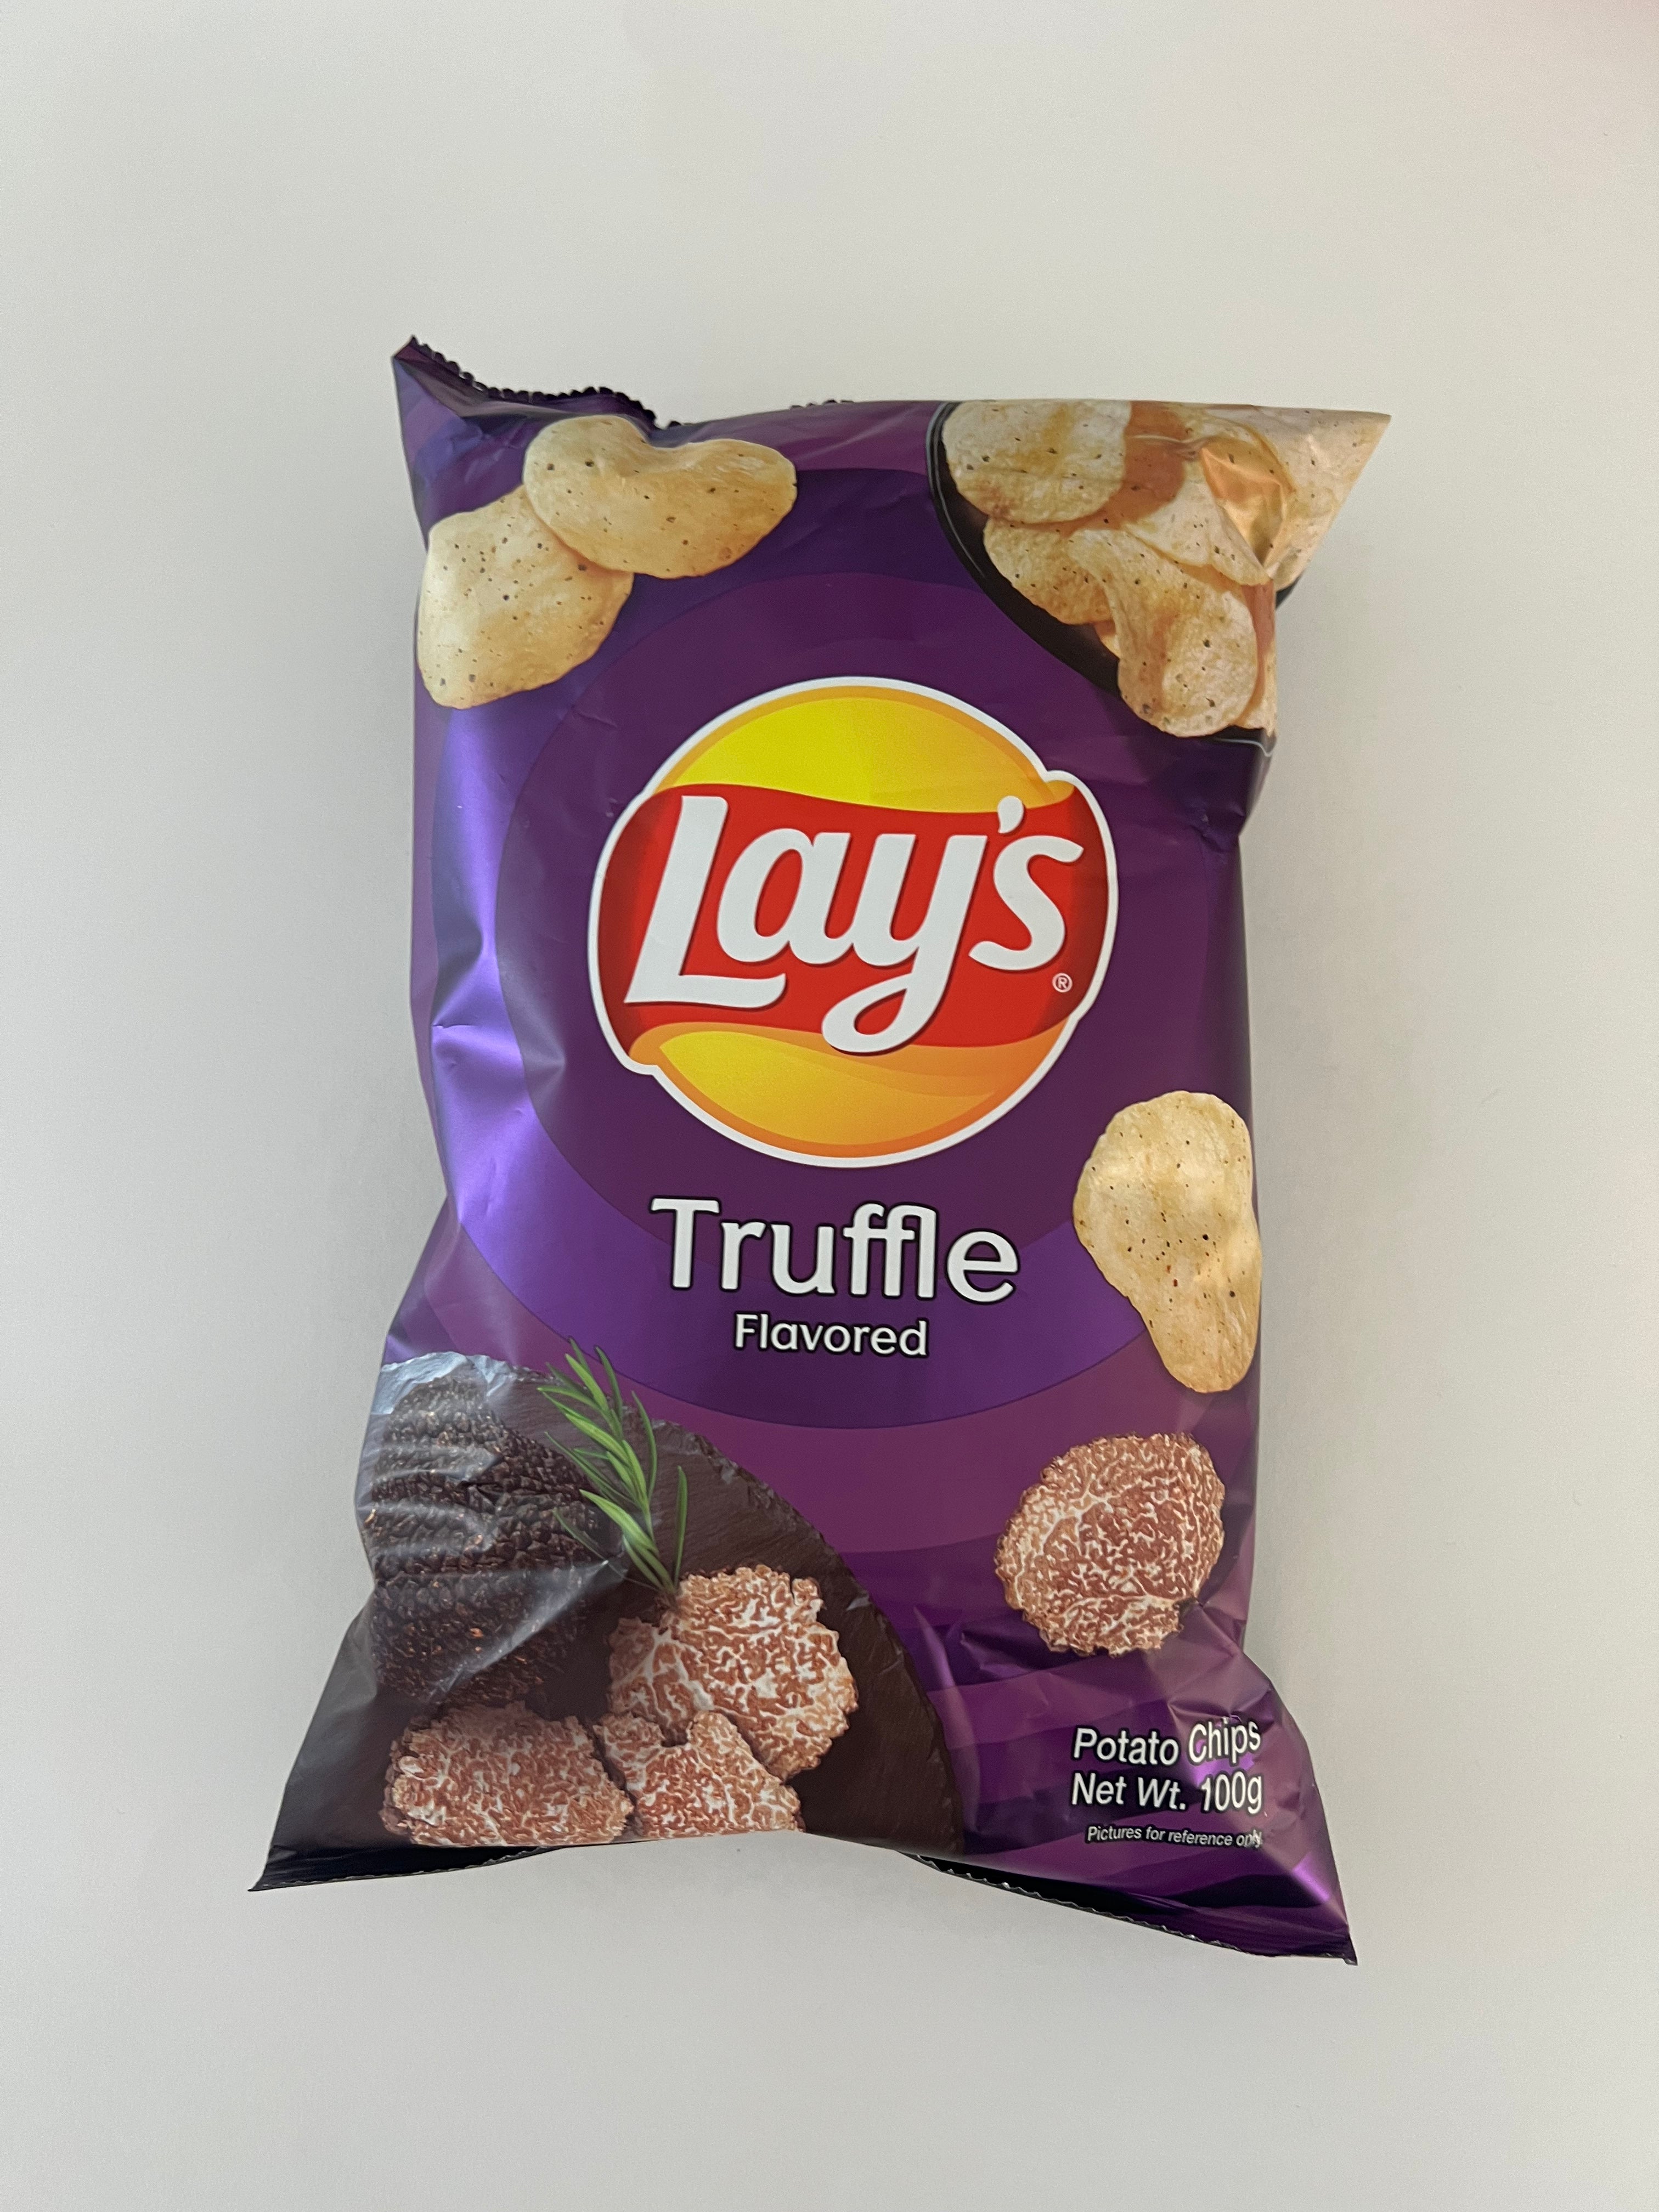 Lay's Truffle flavor